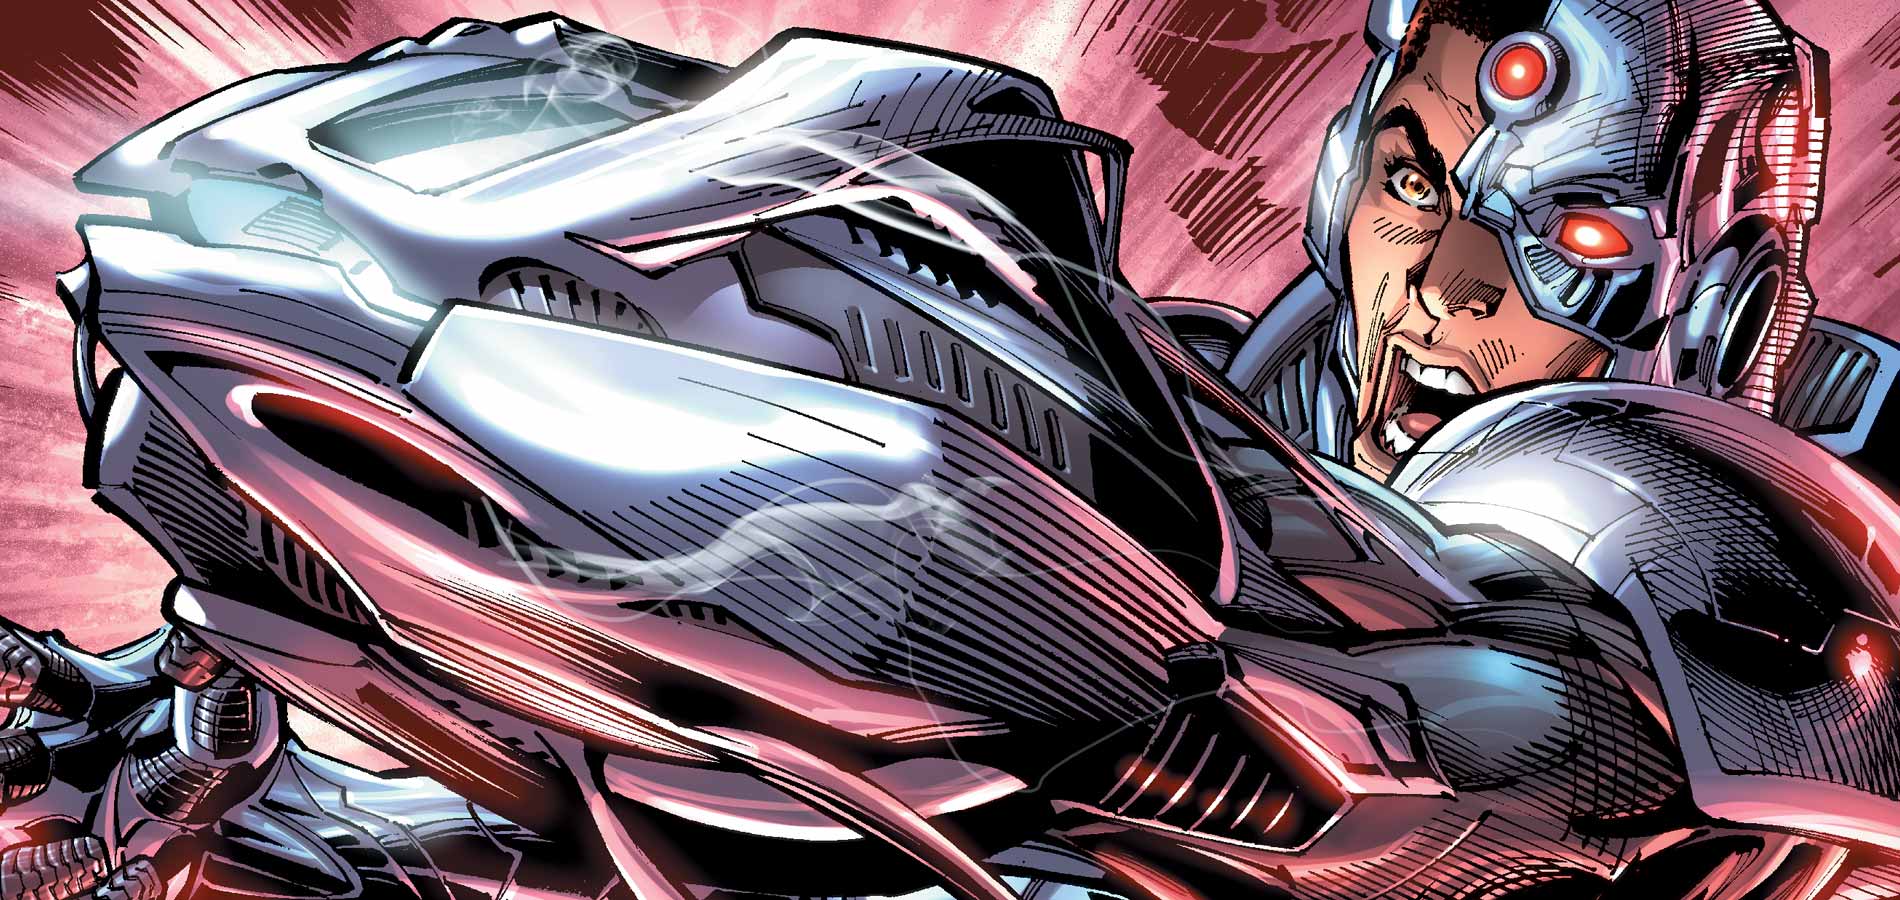 Breaking News: Cyborg Powers Up DC Universe's Doom Patrol